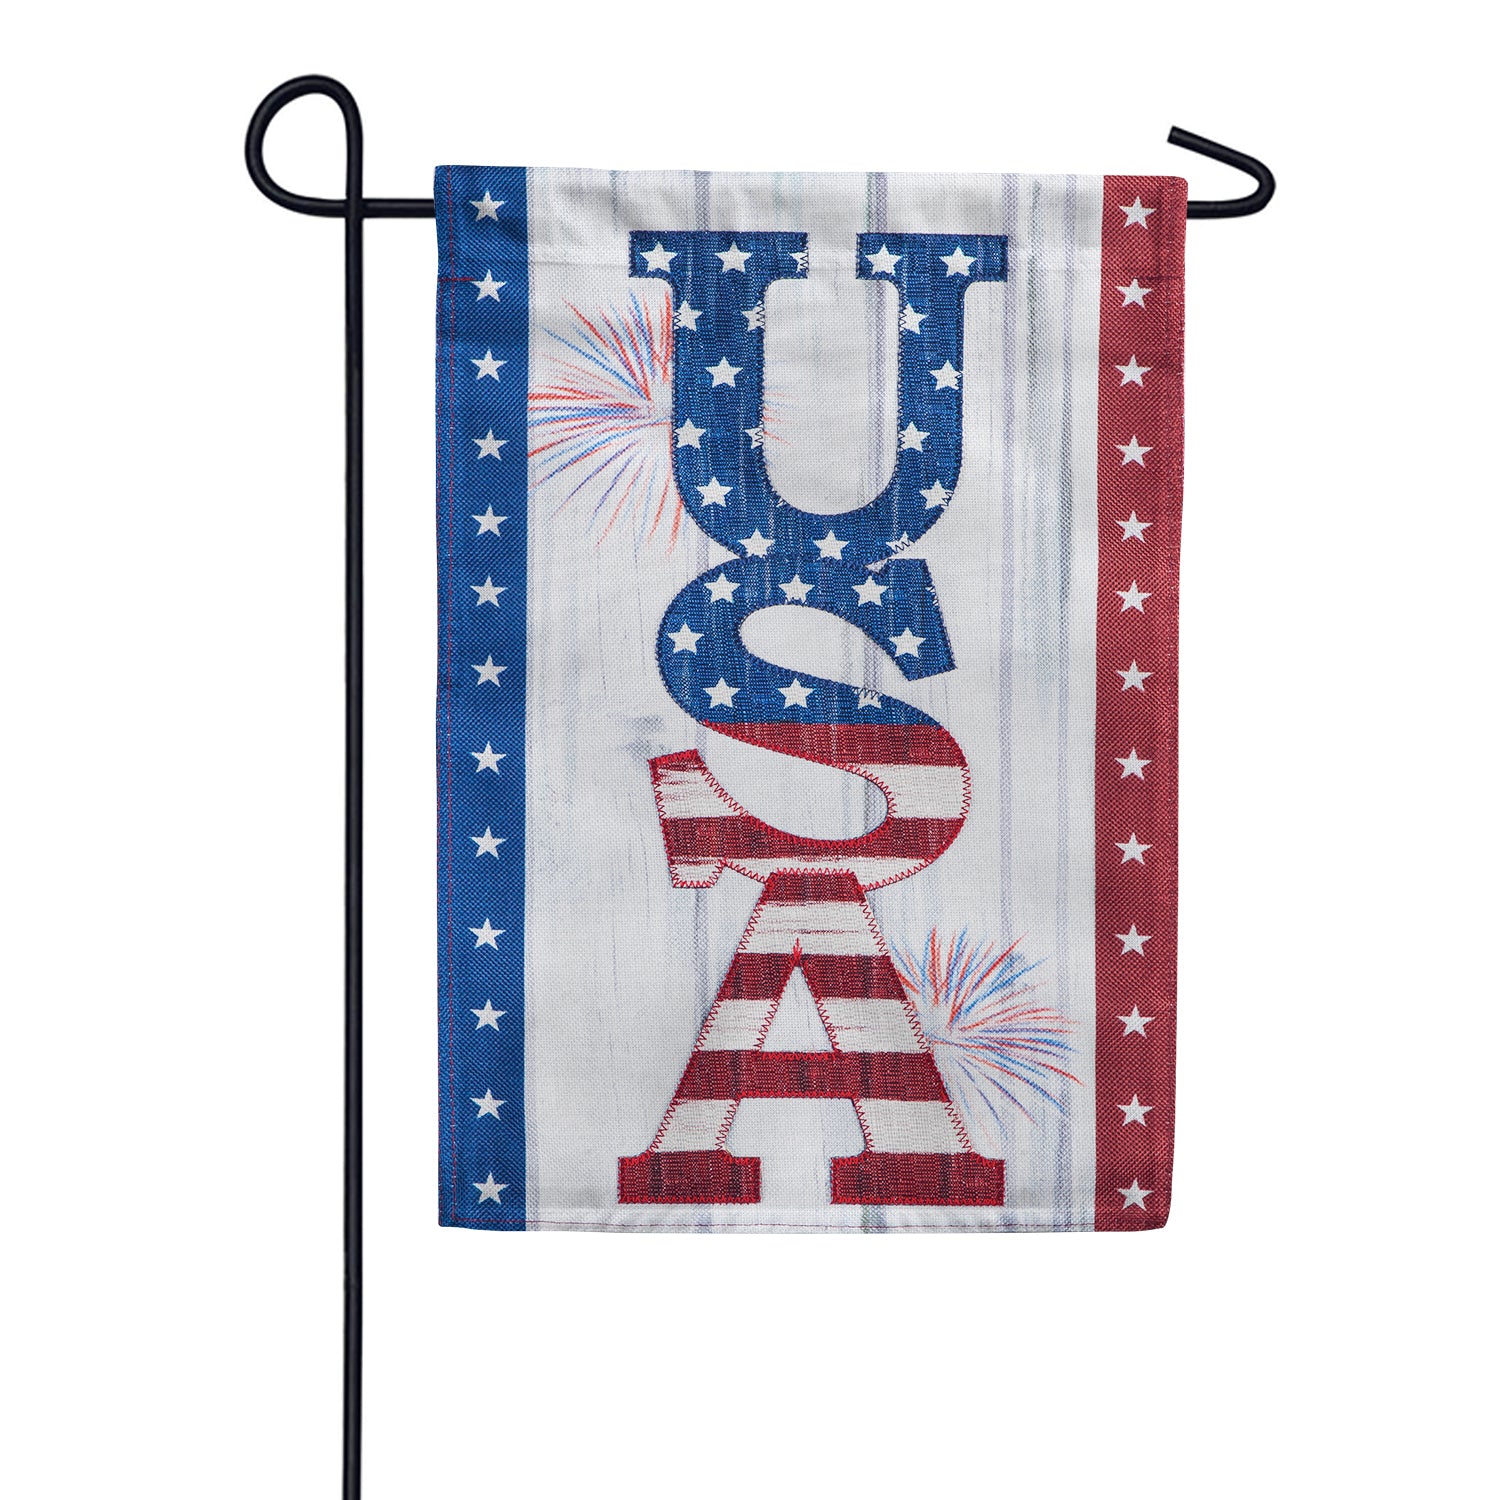 USA Fireworks Burlap Garden Flag